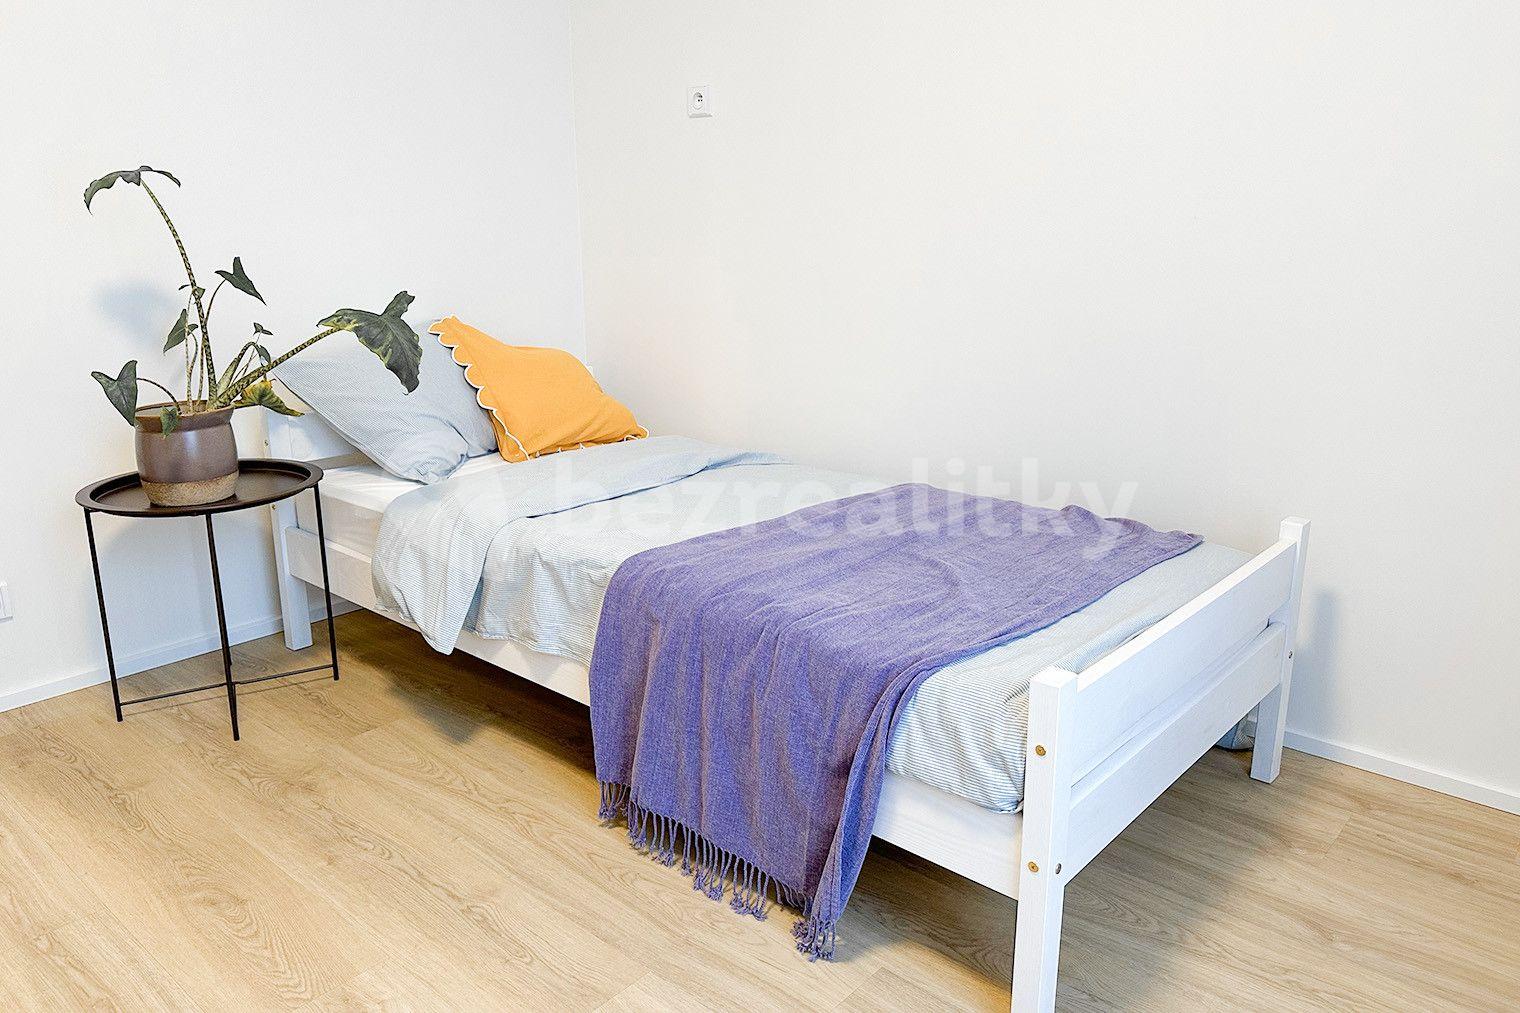 3 bedroom flat to rent, 90 m², U Pergamenky, Prague, Prague